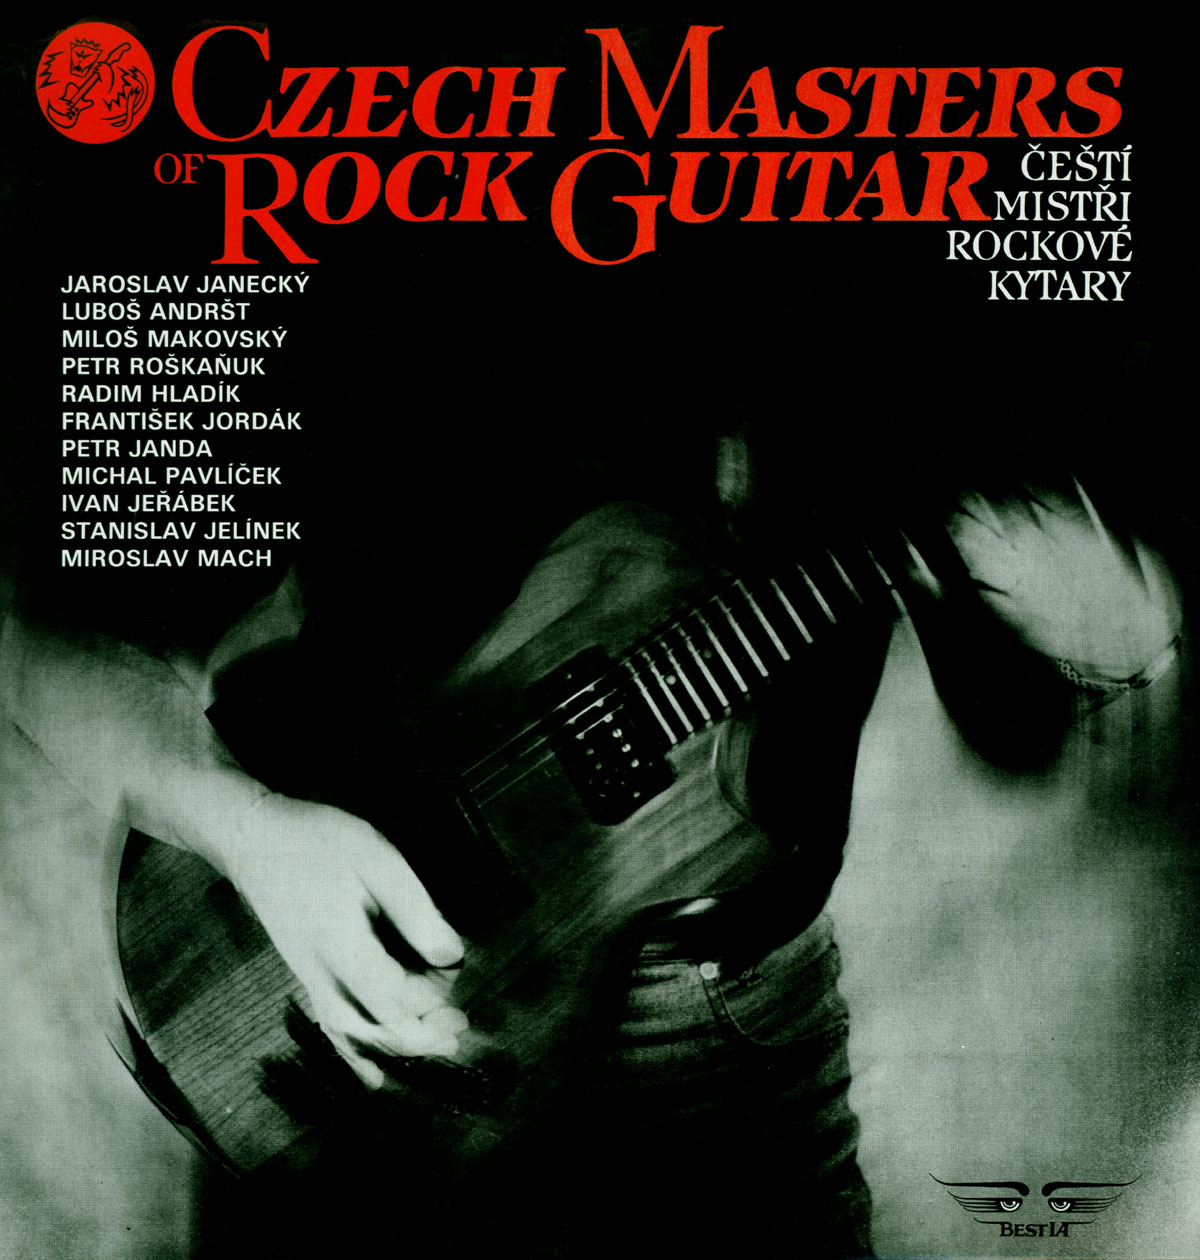 CZECH MASTERS OF ROCK GUITAR